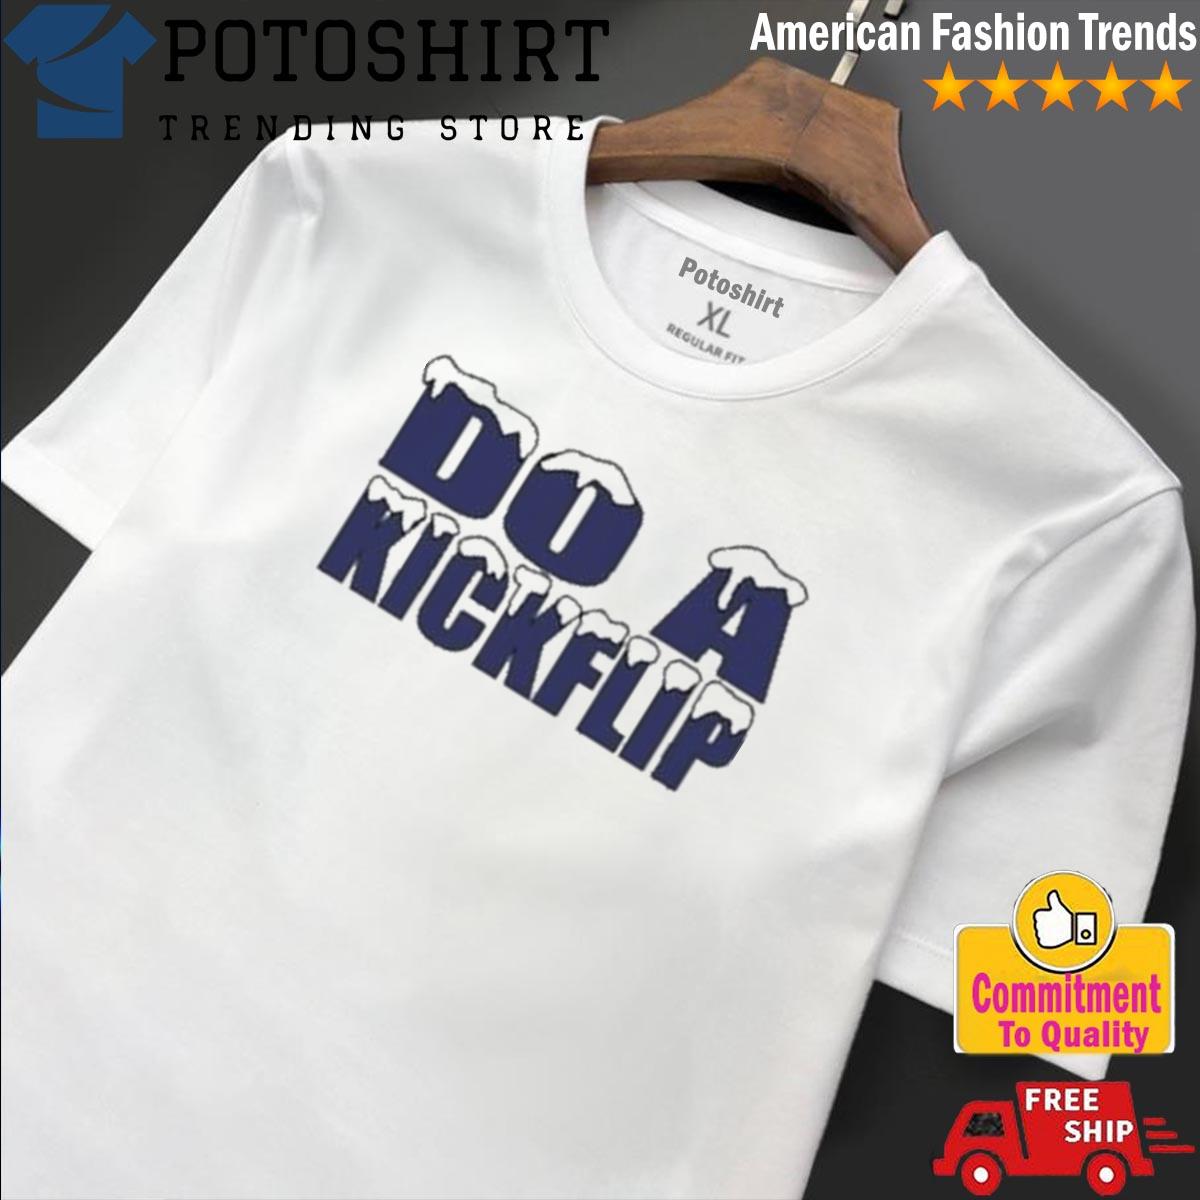 Do A Kickflip Louis Vuitton Messi Shirt - High-Quality Printed Brand